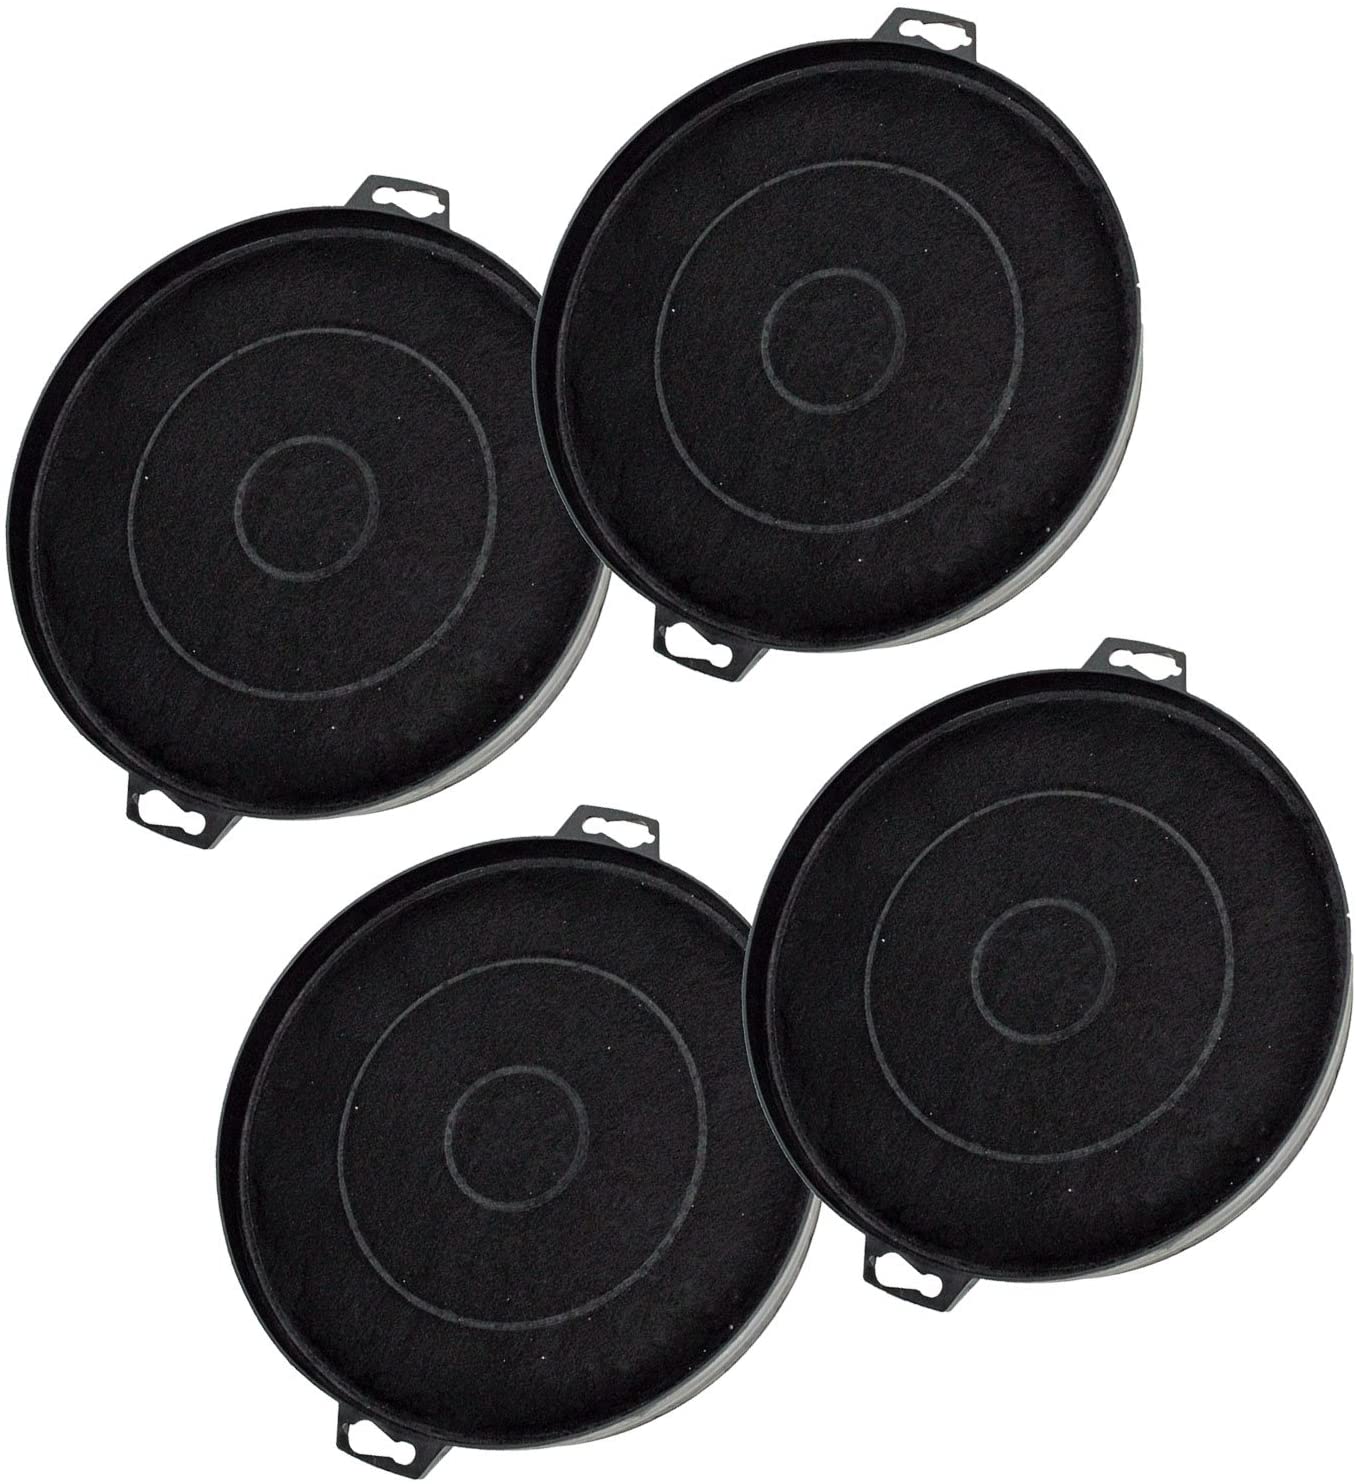 Carbon Charcoal Filter for NEFF Cooker Hoods/Kitchen Vents D86 D87 D89 (Pack of 4)